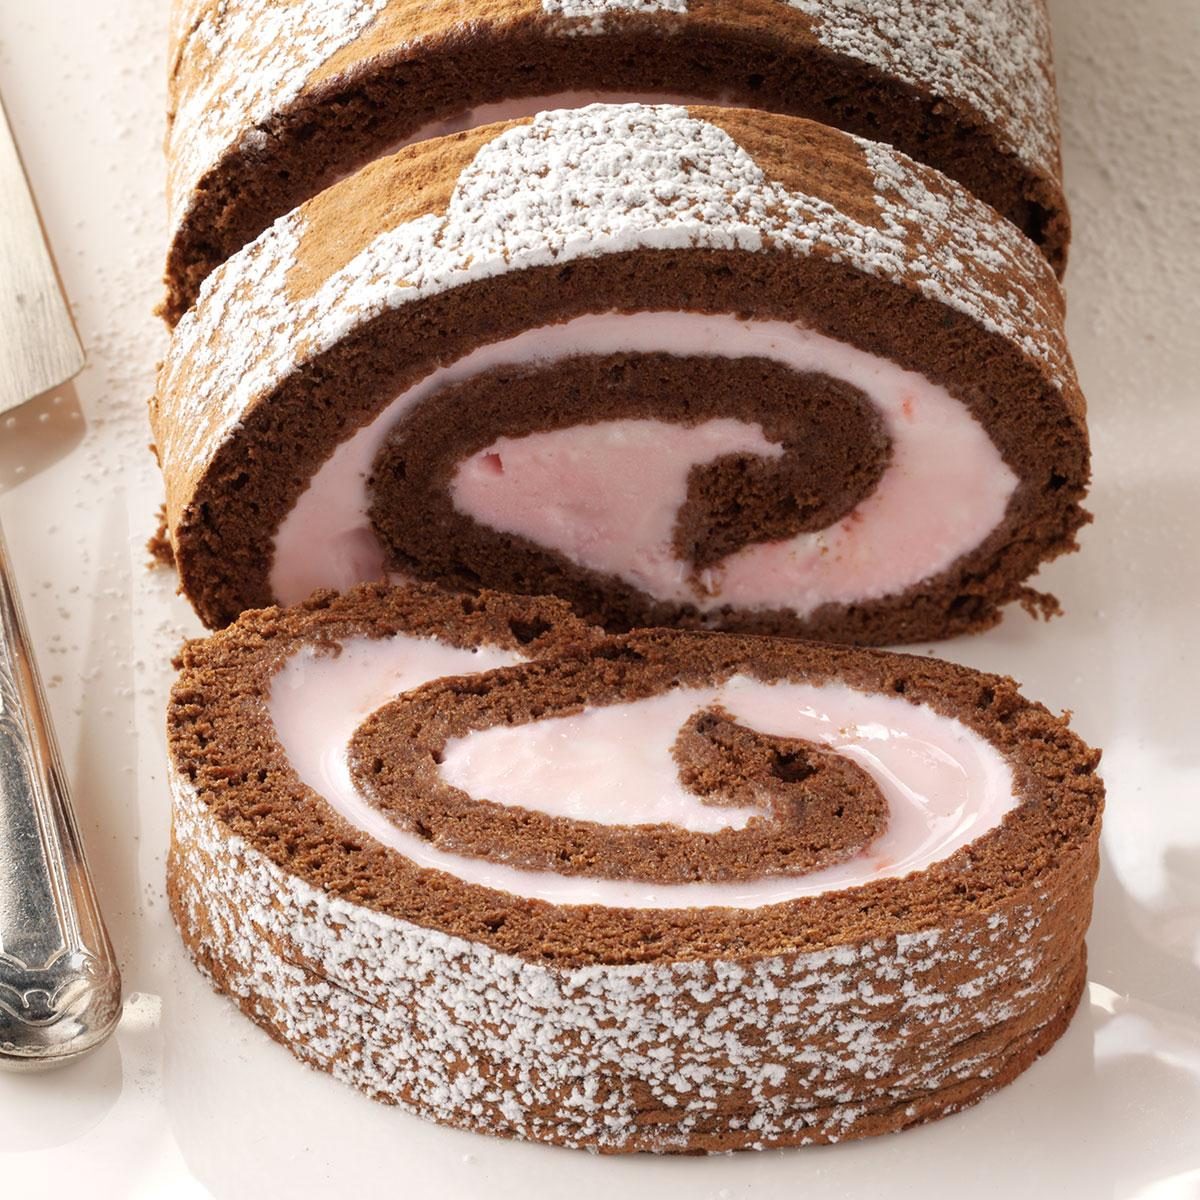 Inspired by: Baskin-Robbins Yule Log Roll Cake